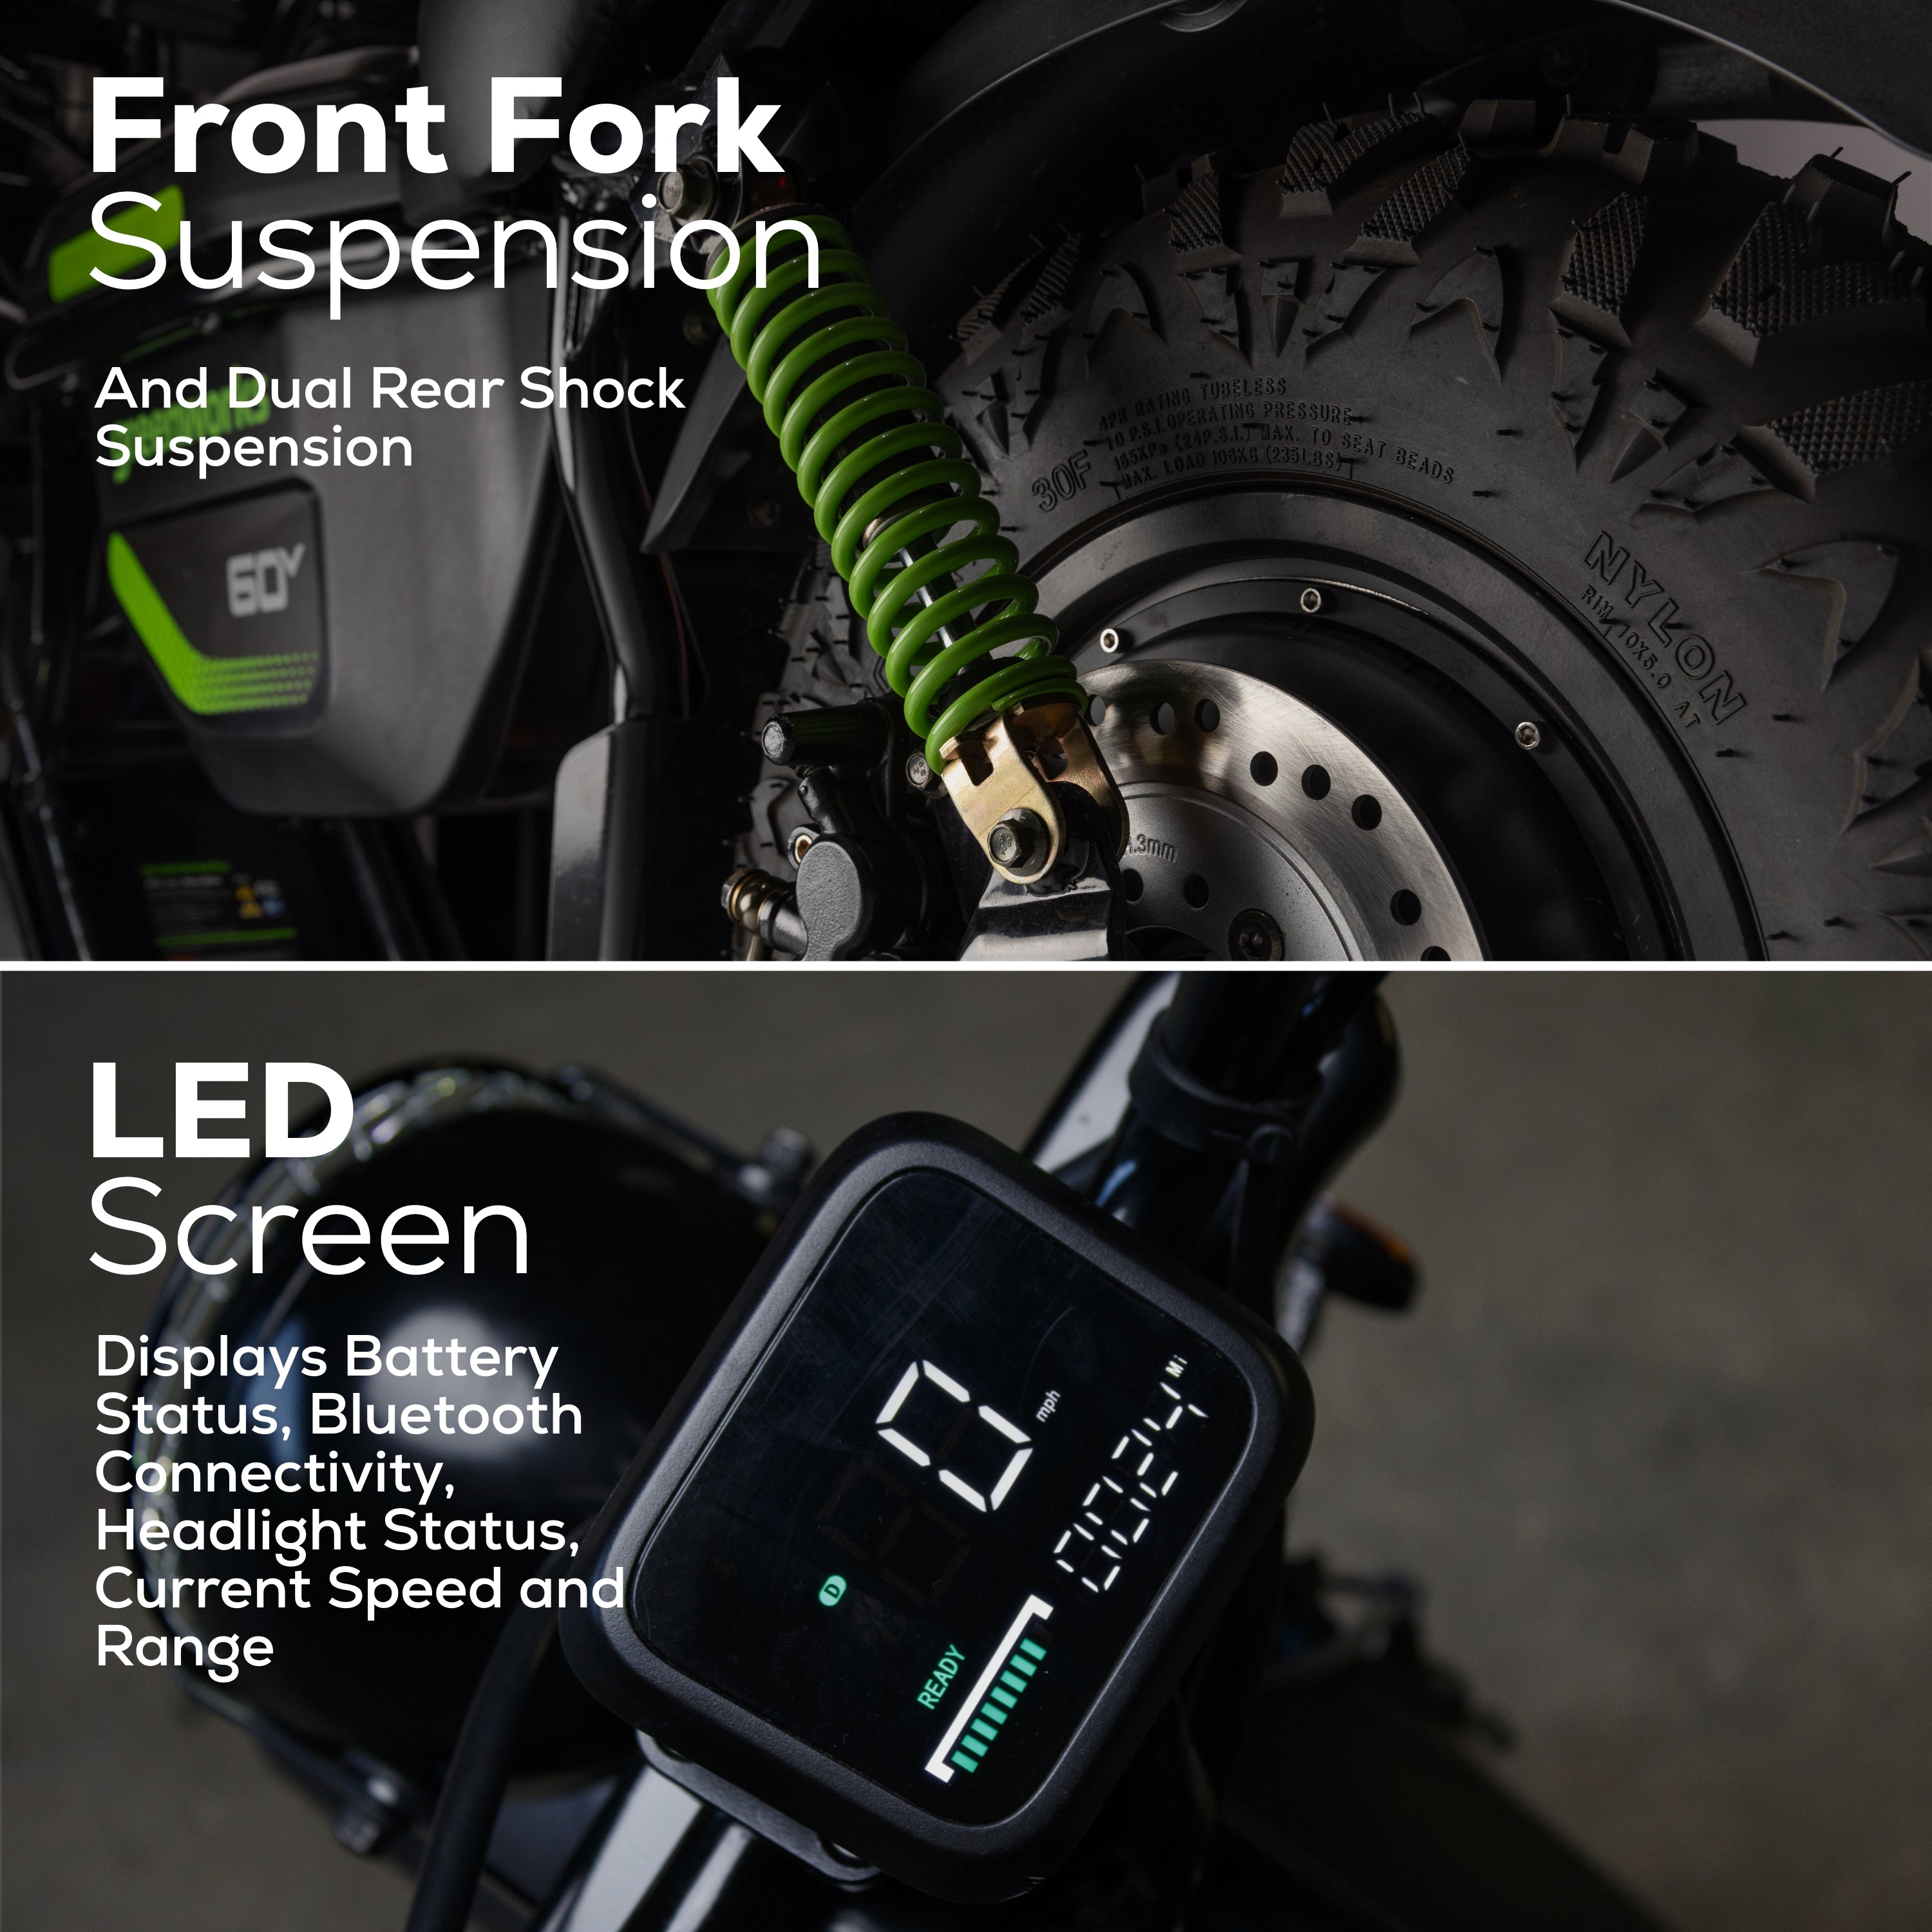 60V STEALTH Series Electric Mini-Bike w/ (2) 8.0Ah Batteries & Dual-Port Rapid Charger